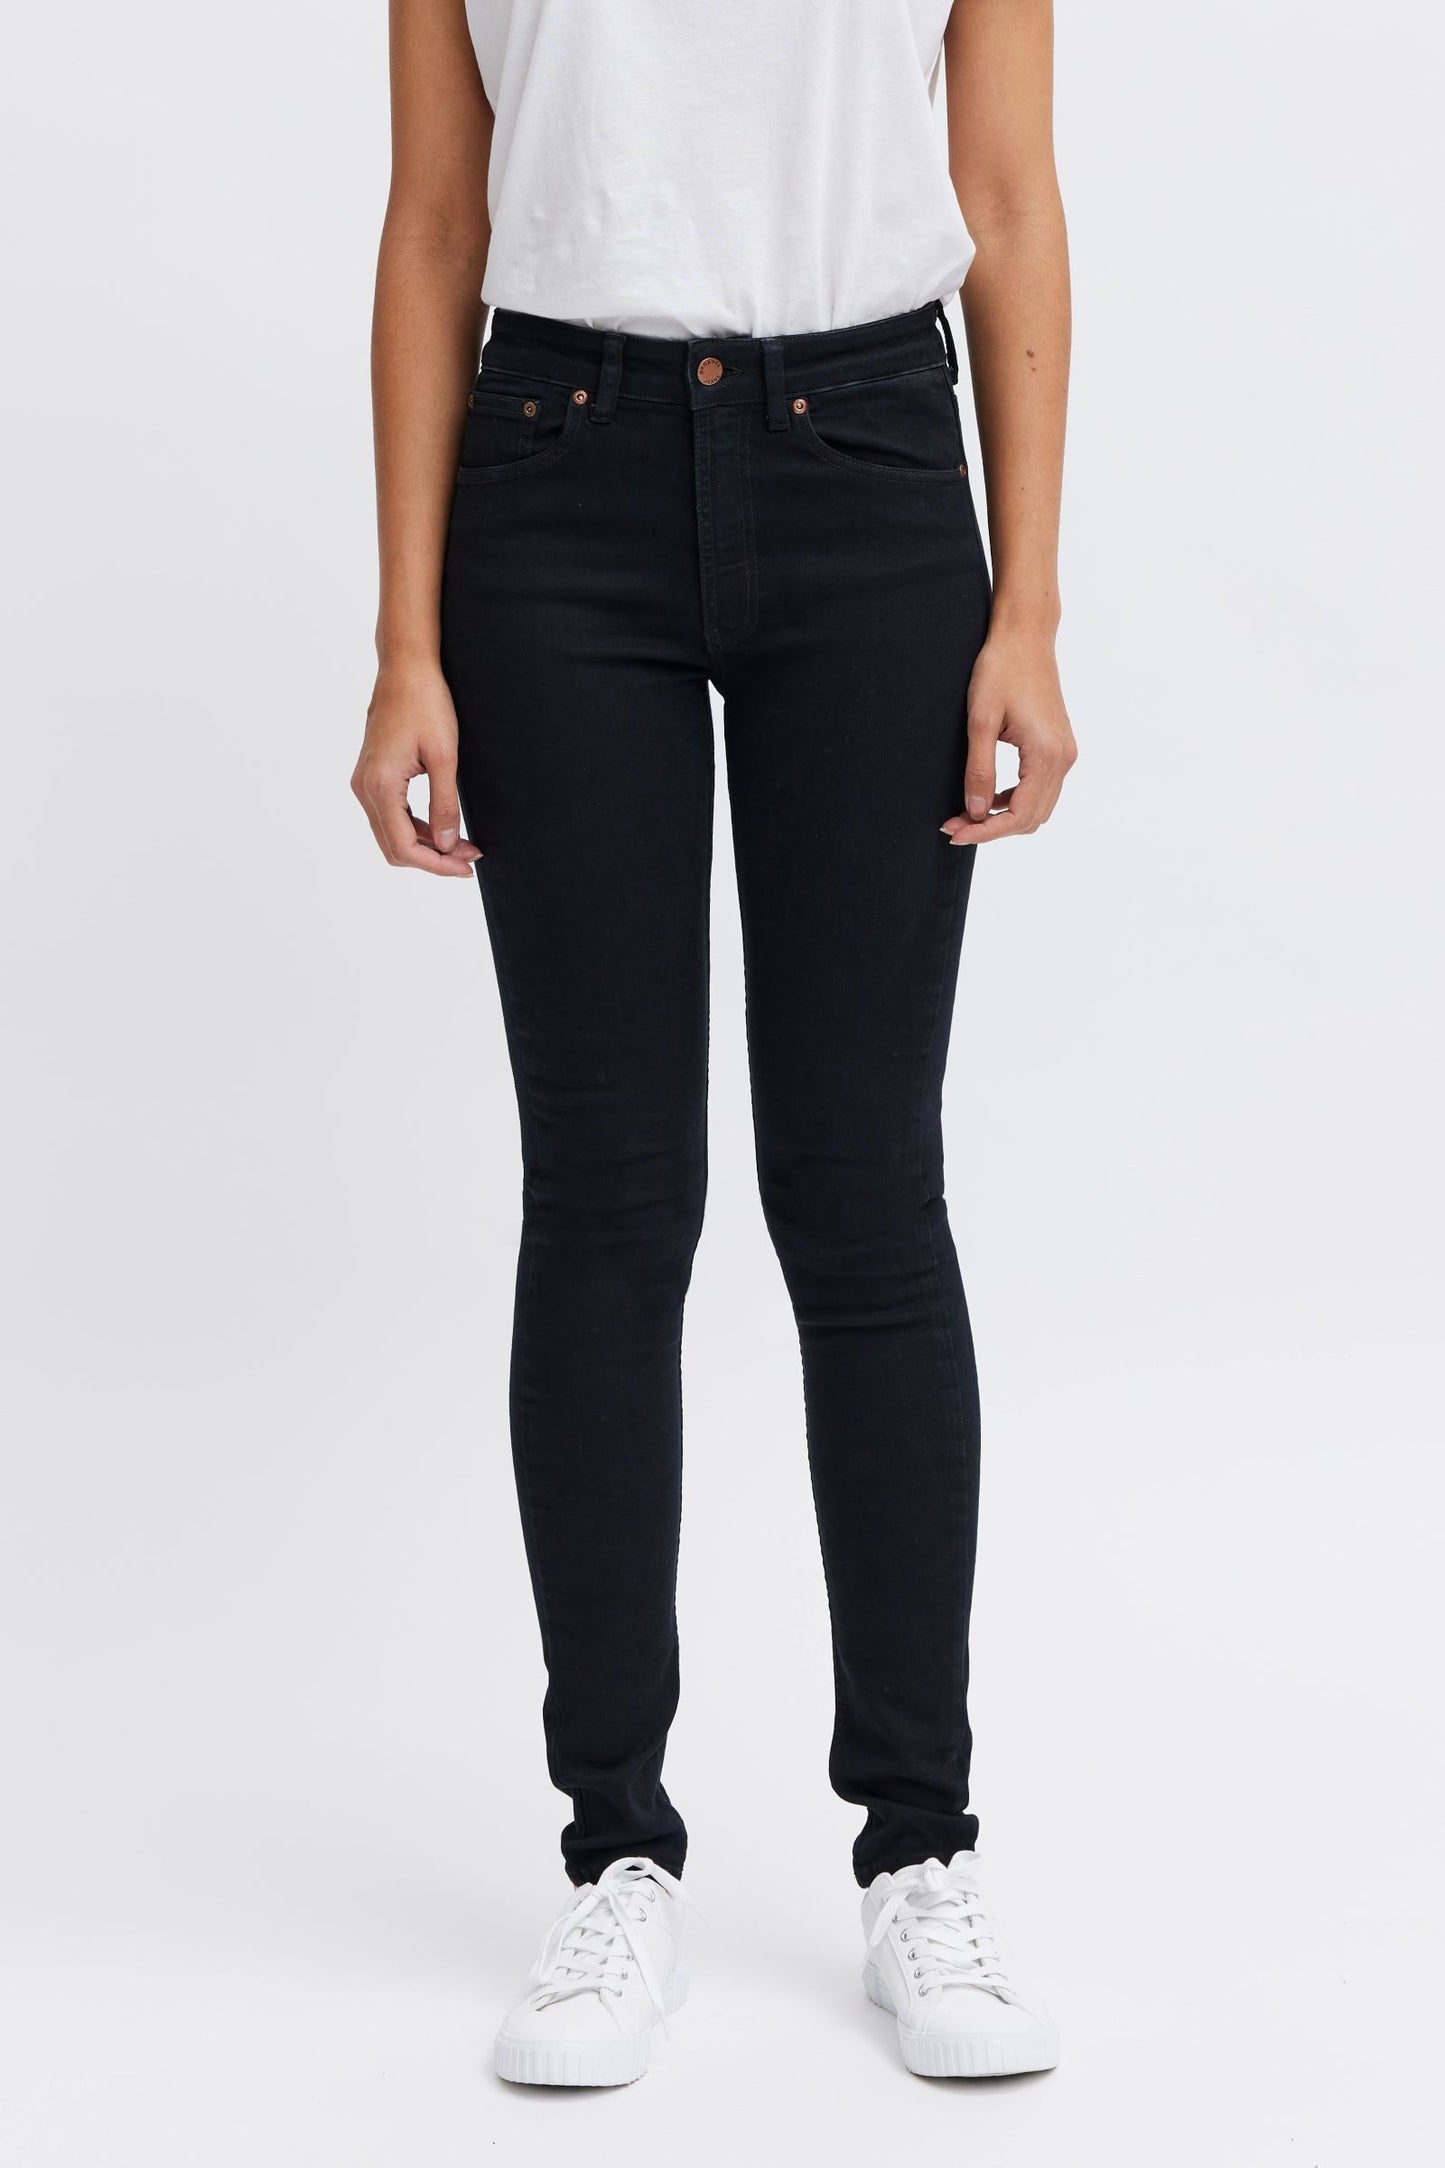 Ethical black jeans for women - vegan fashion